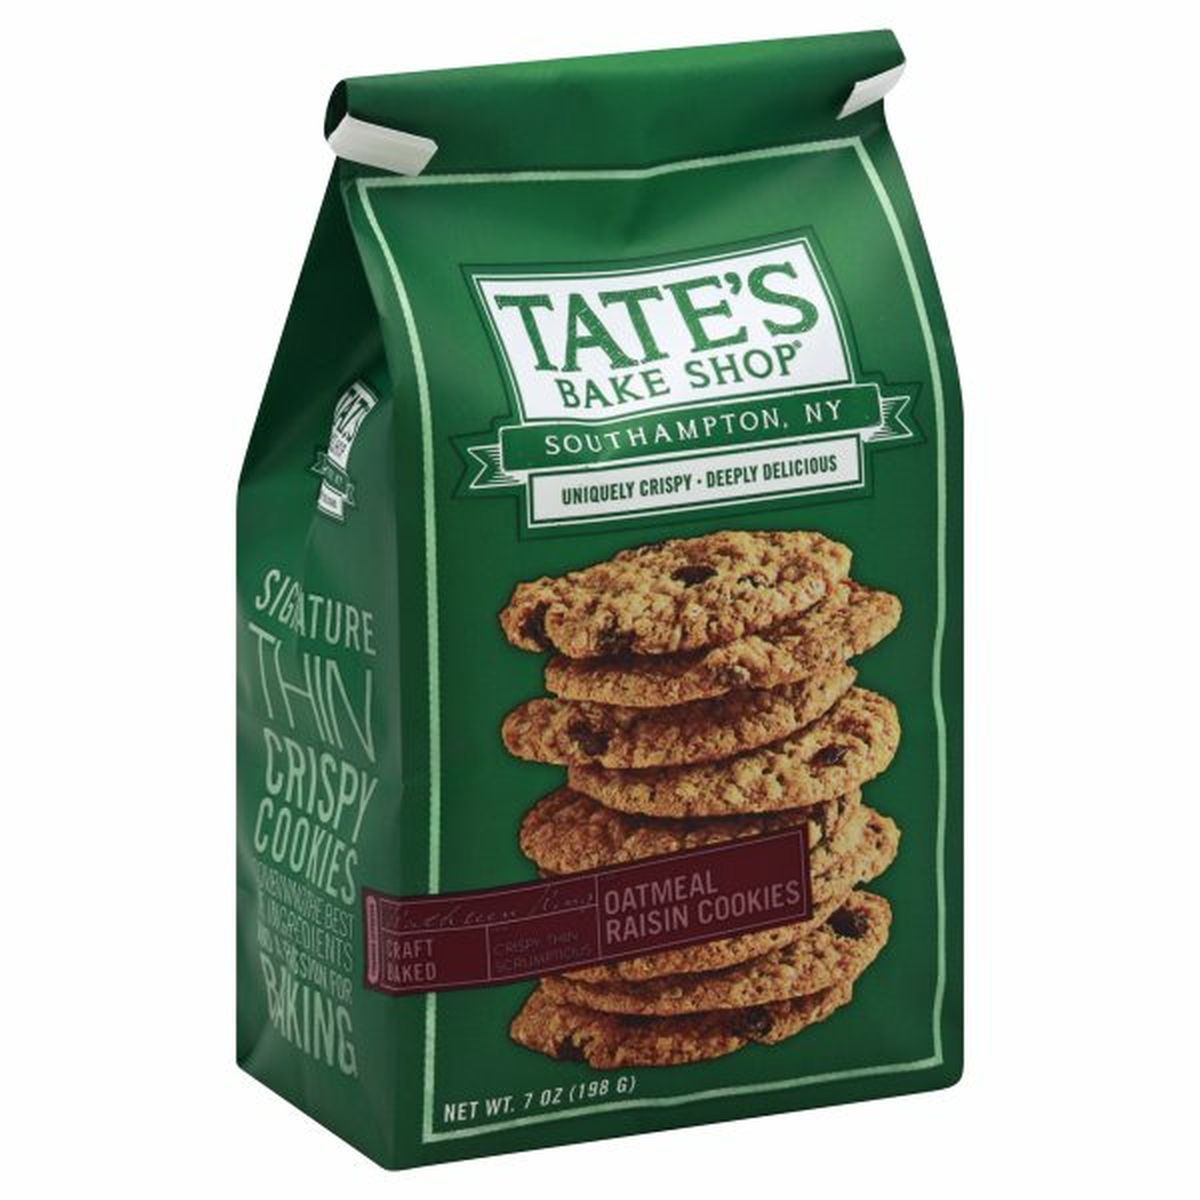 Calories in Tate's Bake Shop Cookies, Oatmeal Raisin